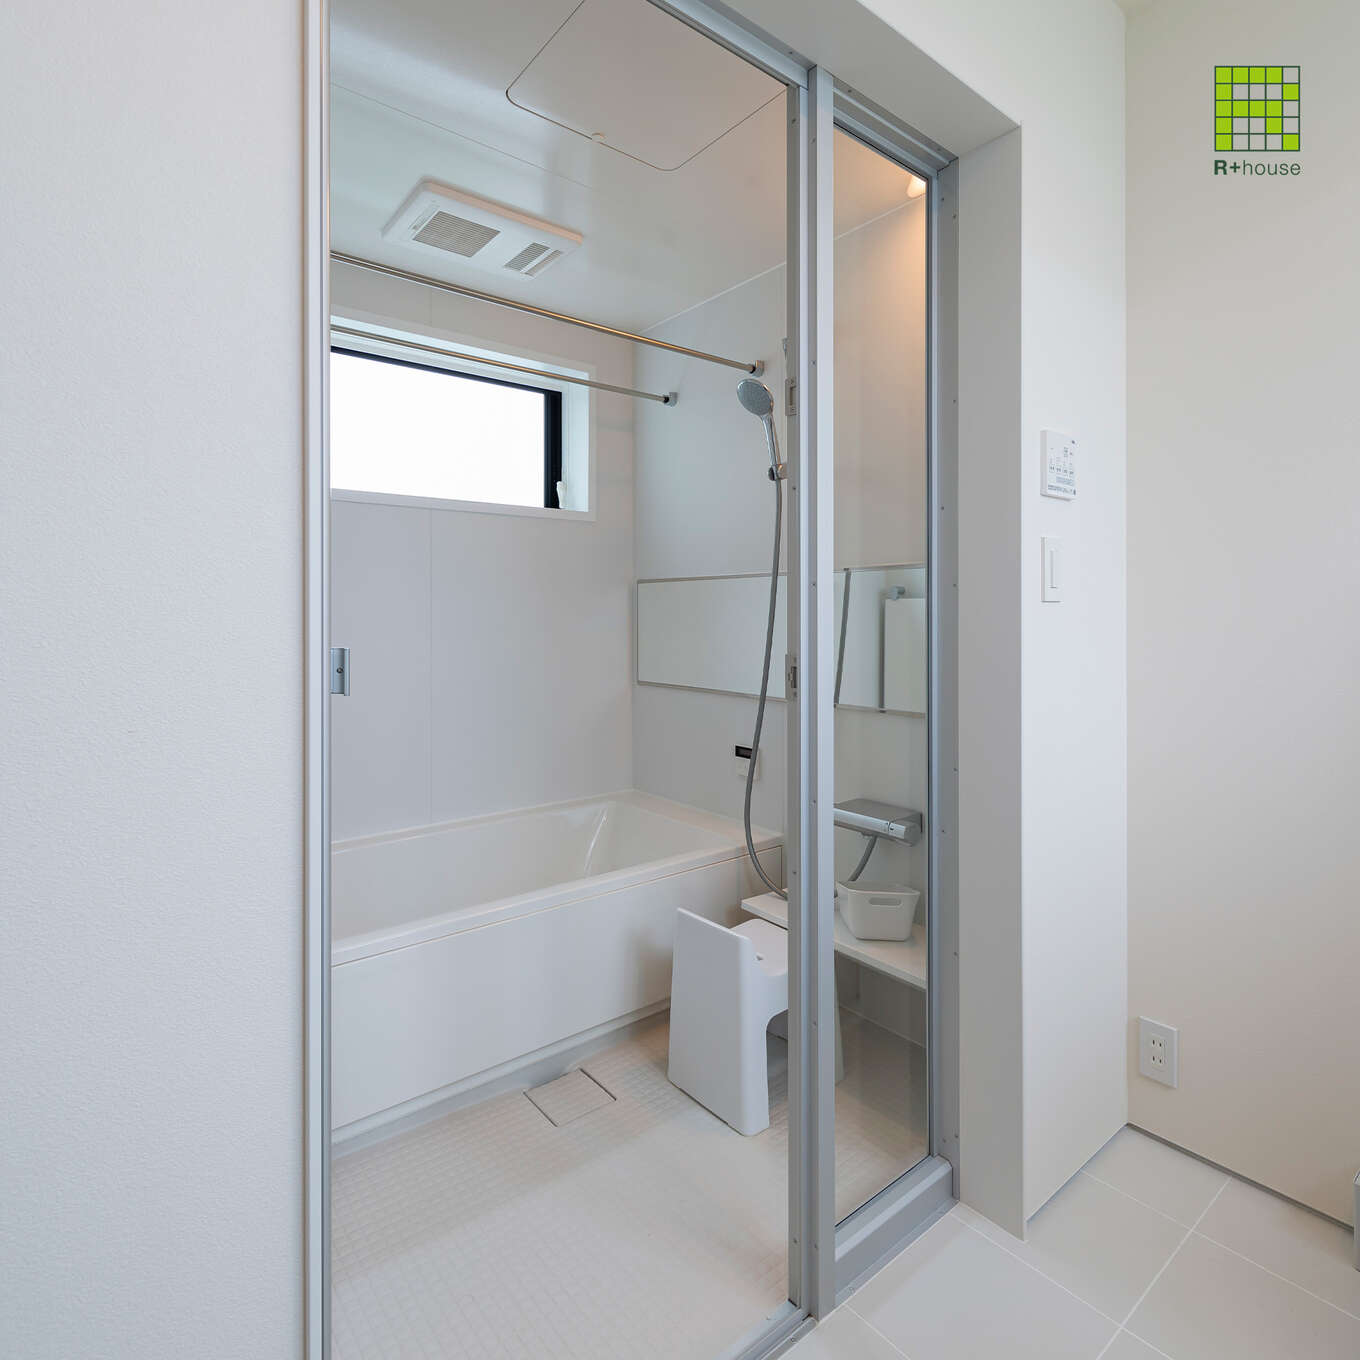 R+houseの物件の浴室の写真です。脱衣所からガラスの扉越しに真っ白な浴室が見える。